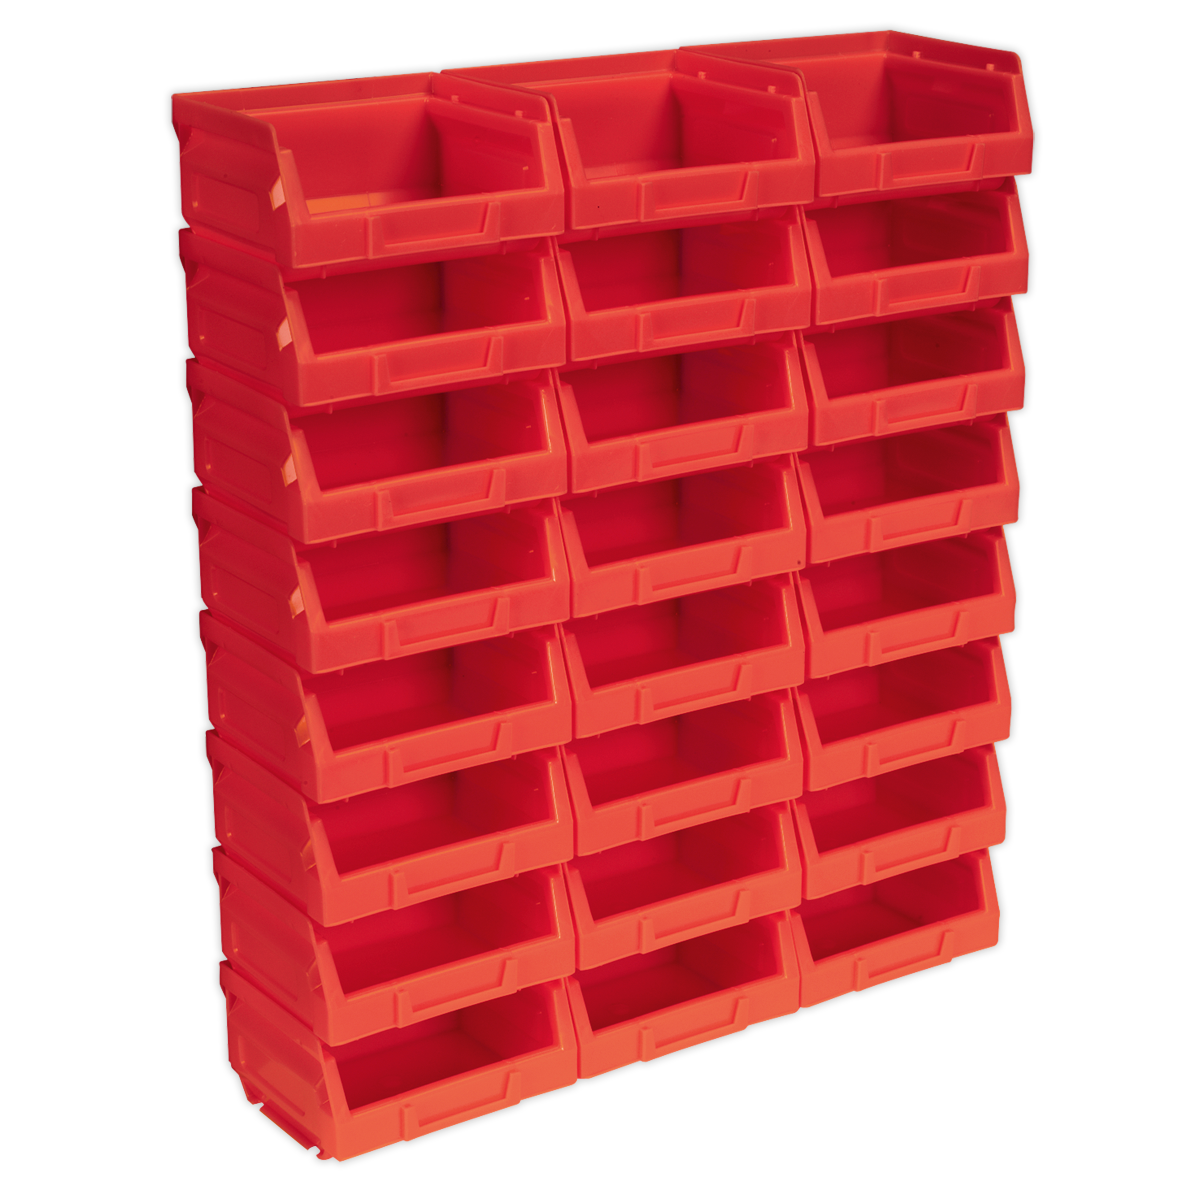 Sealey Plastic Storage Bin 105 x 85 x 55mm - Red Pack of 24